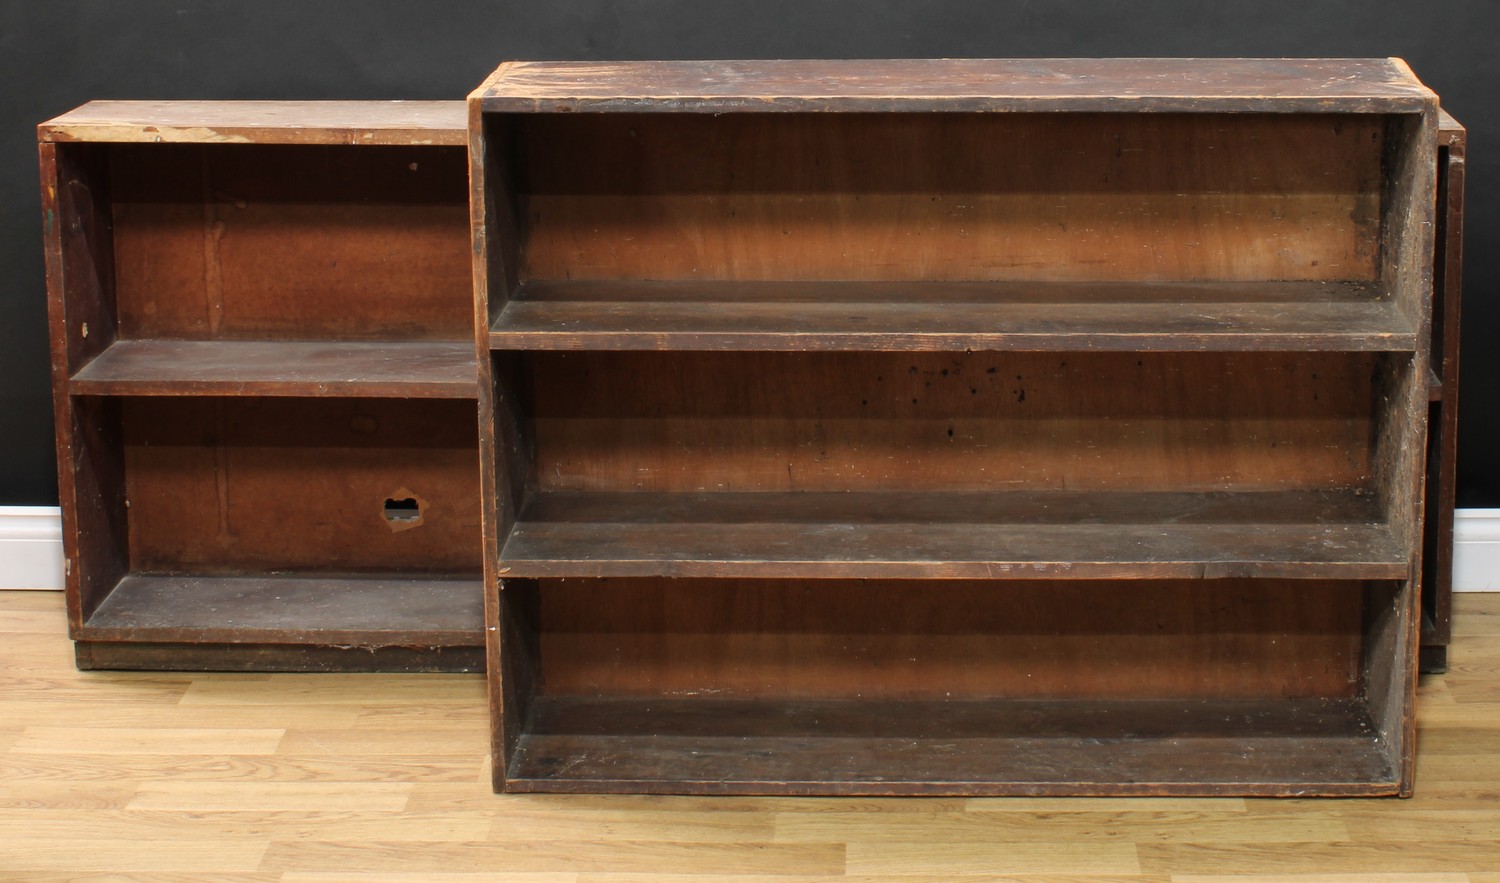 A mahogany shop fitting or bookcase, 74cm high, 182.5cm wide, 24cm deep; a set of pine shelves, 84cm